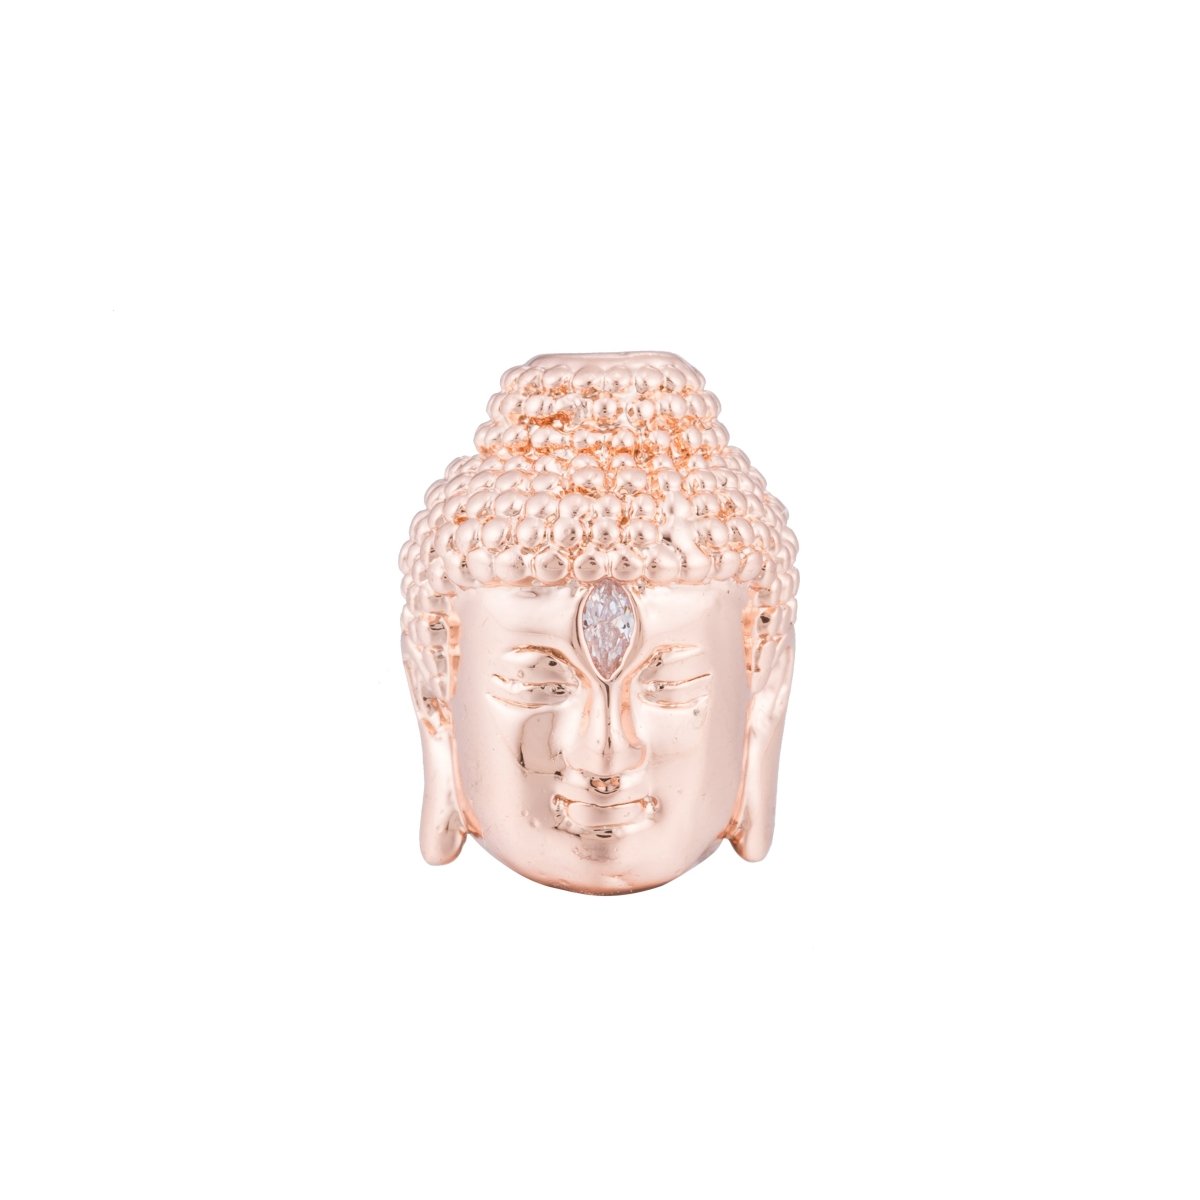 Gold / Silver / Rose Gold Meditation Buddha Head Spacer Beads | B-027 - DLUXCA